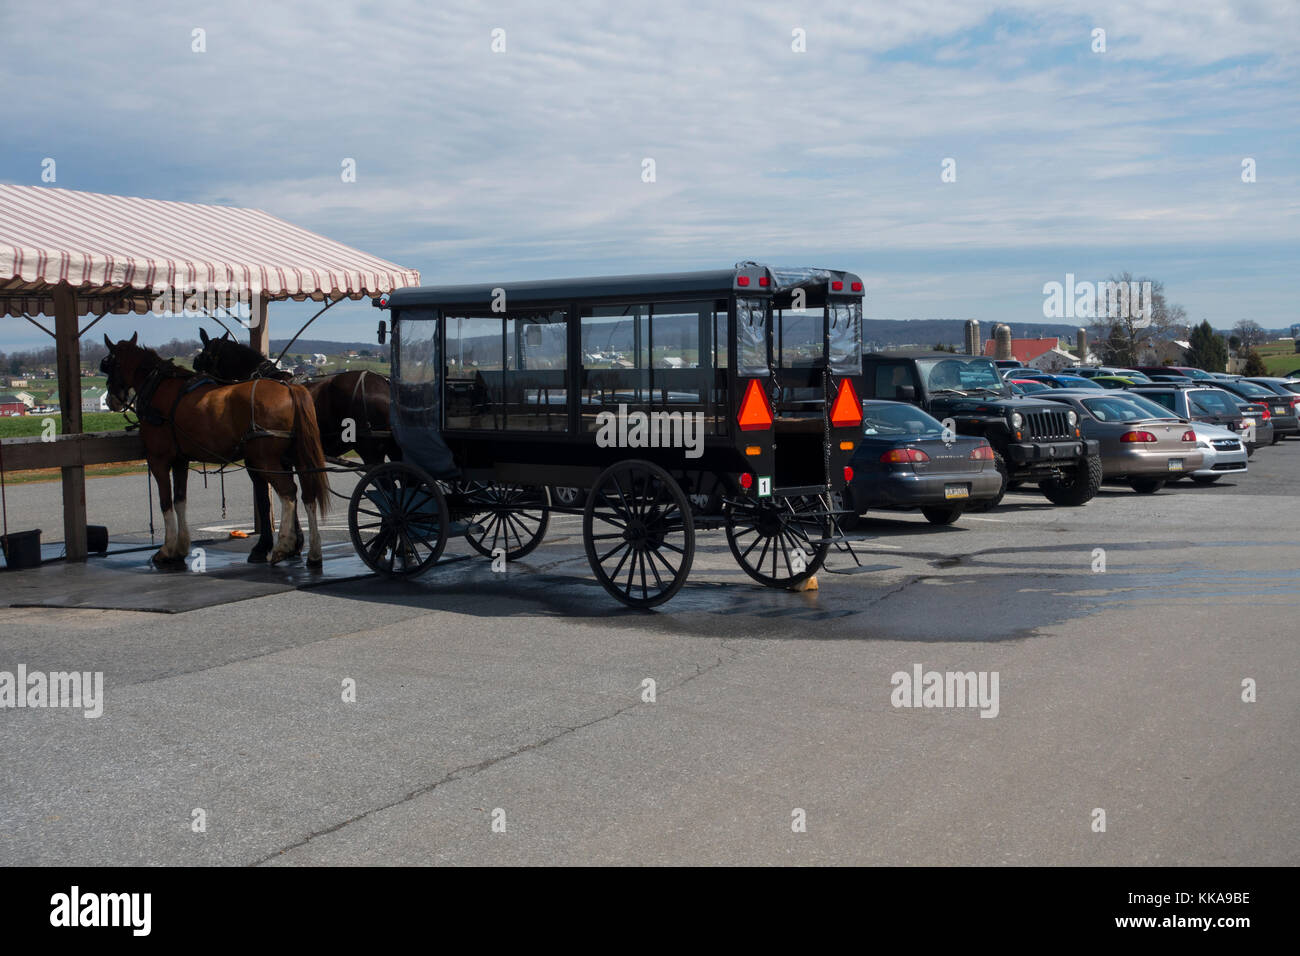 Amish Buggy Parking Stock Photos & Amish Buggy Parking ...